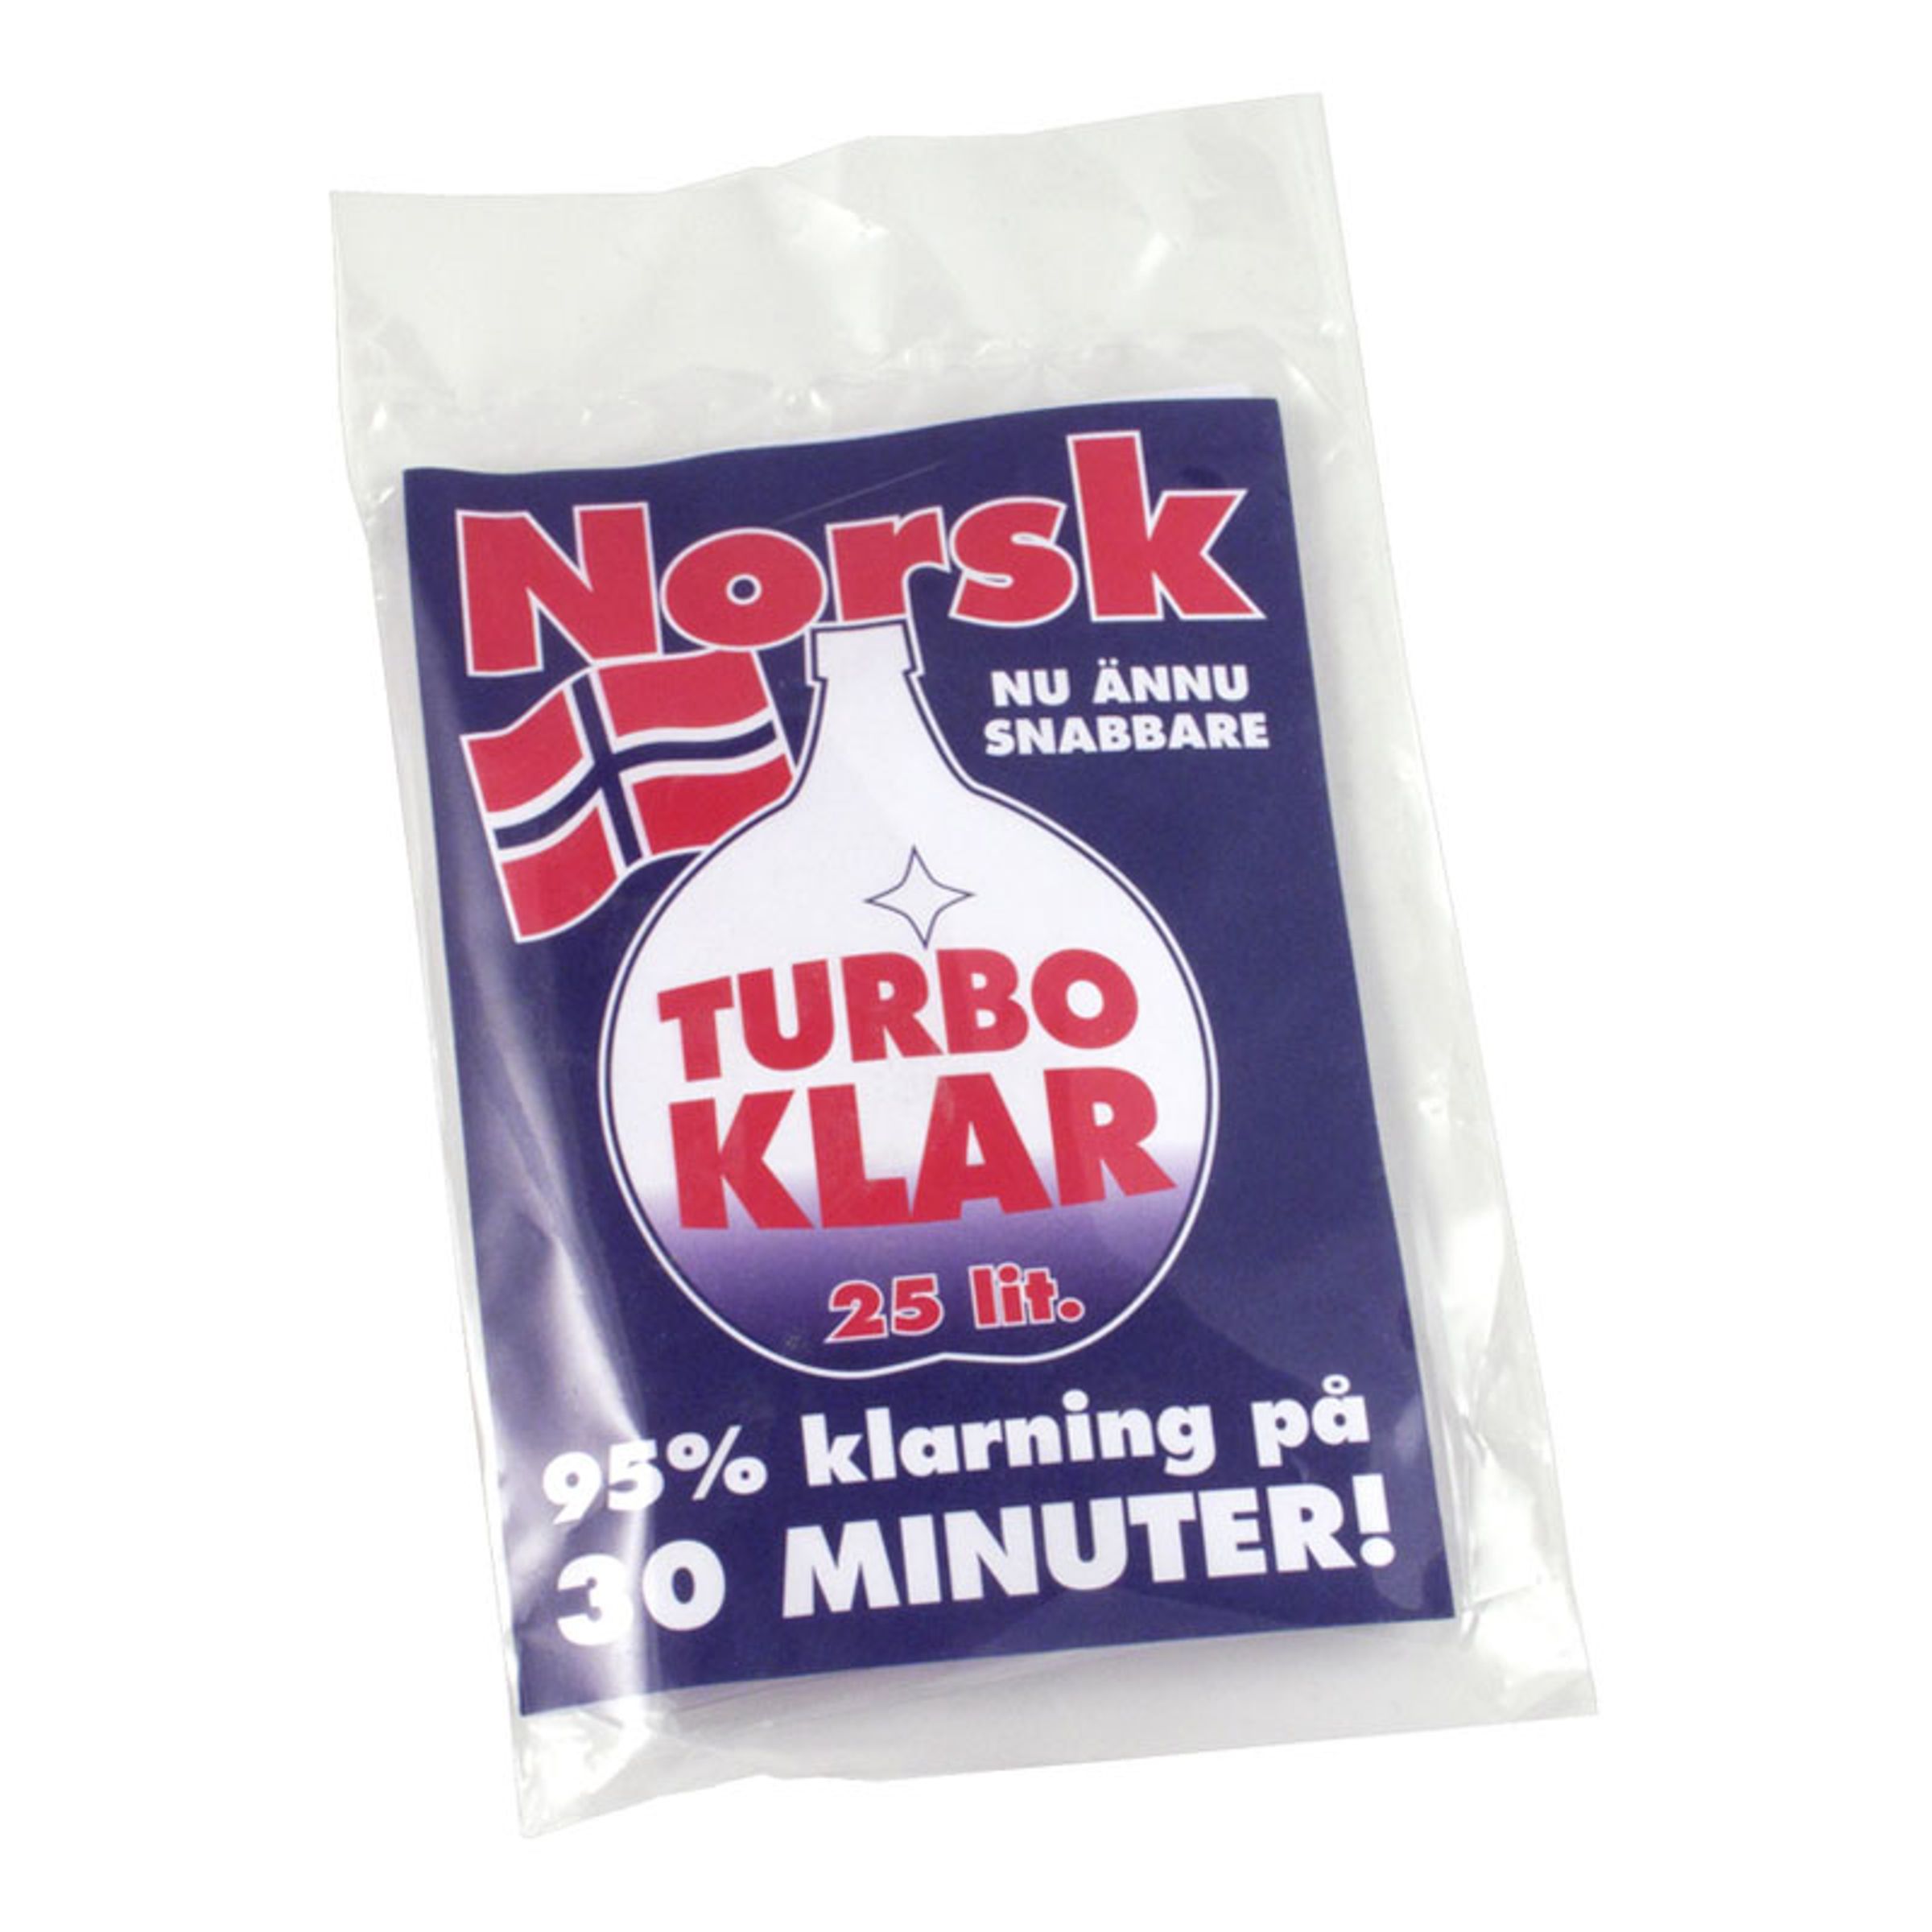 Norsk Turboklar